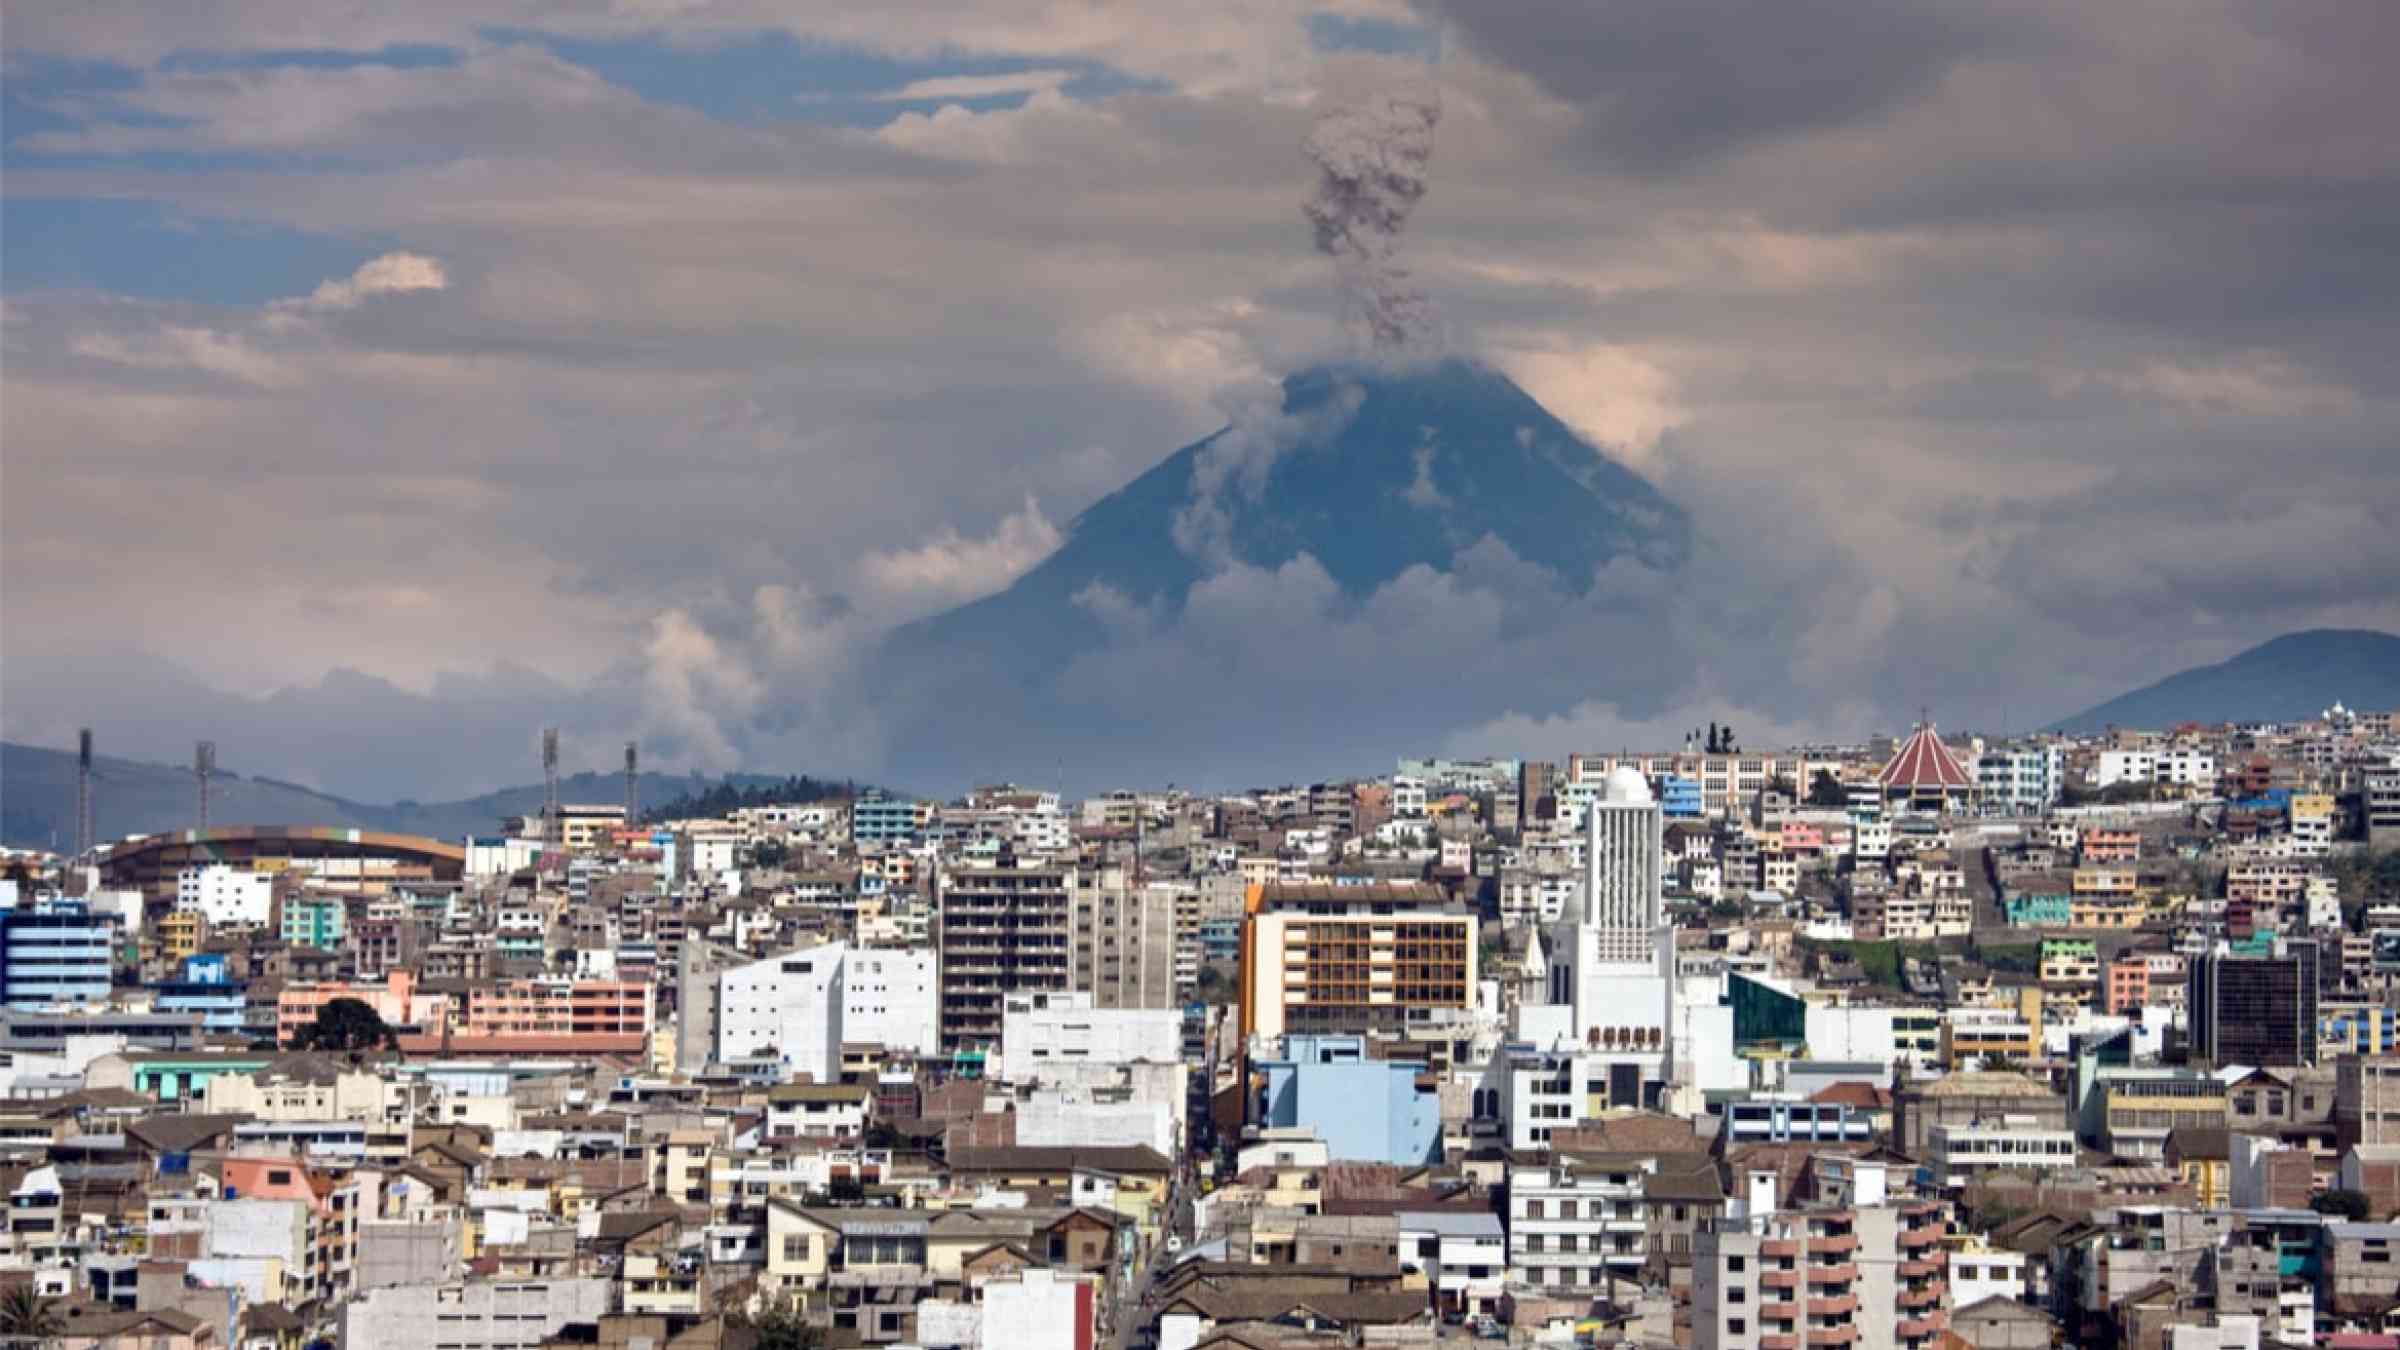 Eruption of the Tungurahua volcano above the city of Ambato, Equador (2016)